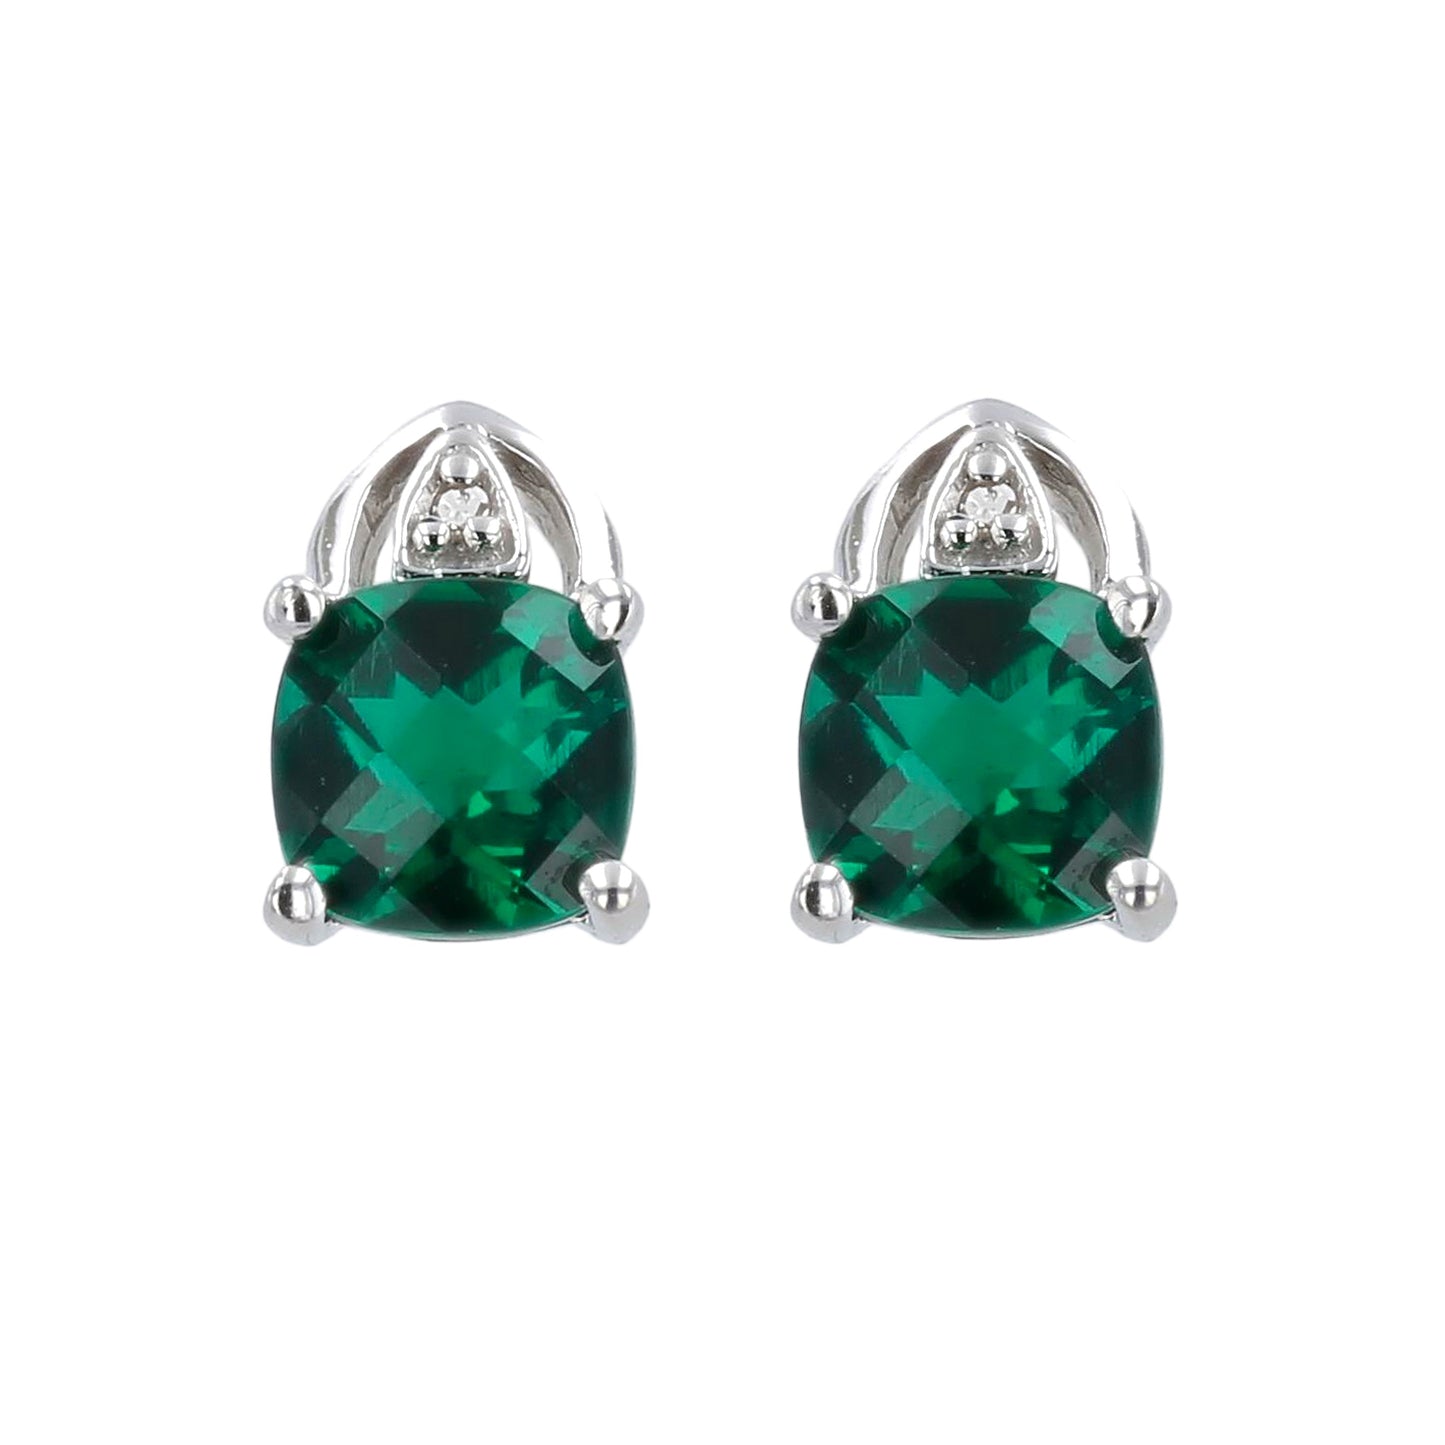 10K White Gold Diamond and Emerald Earring-13129